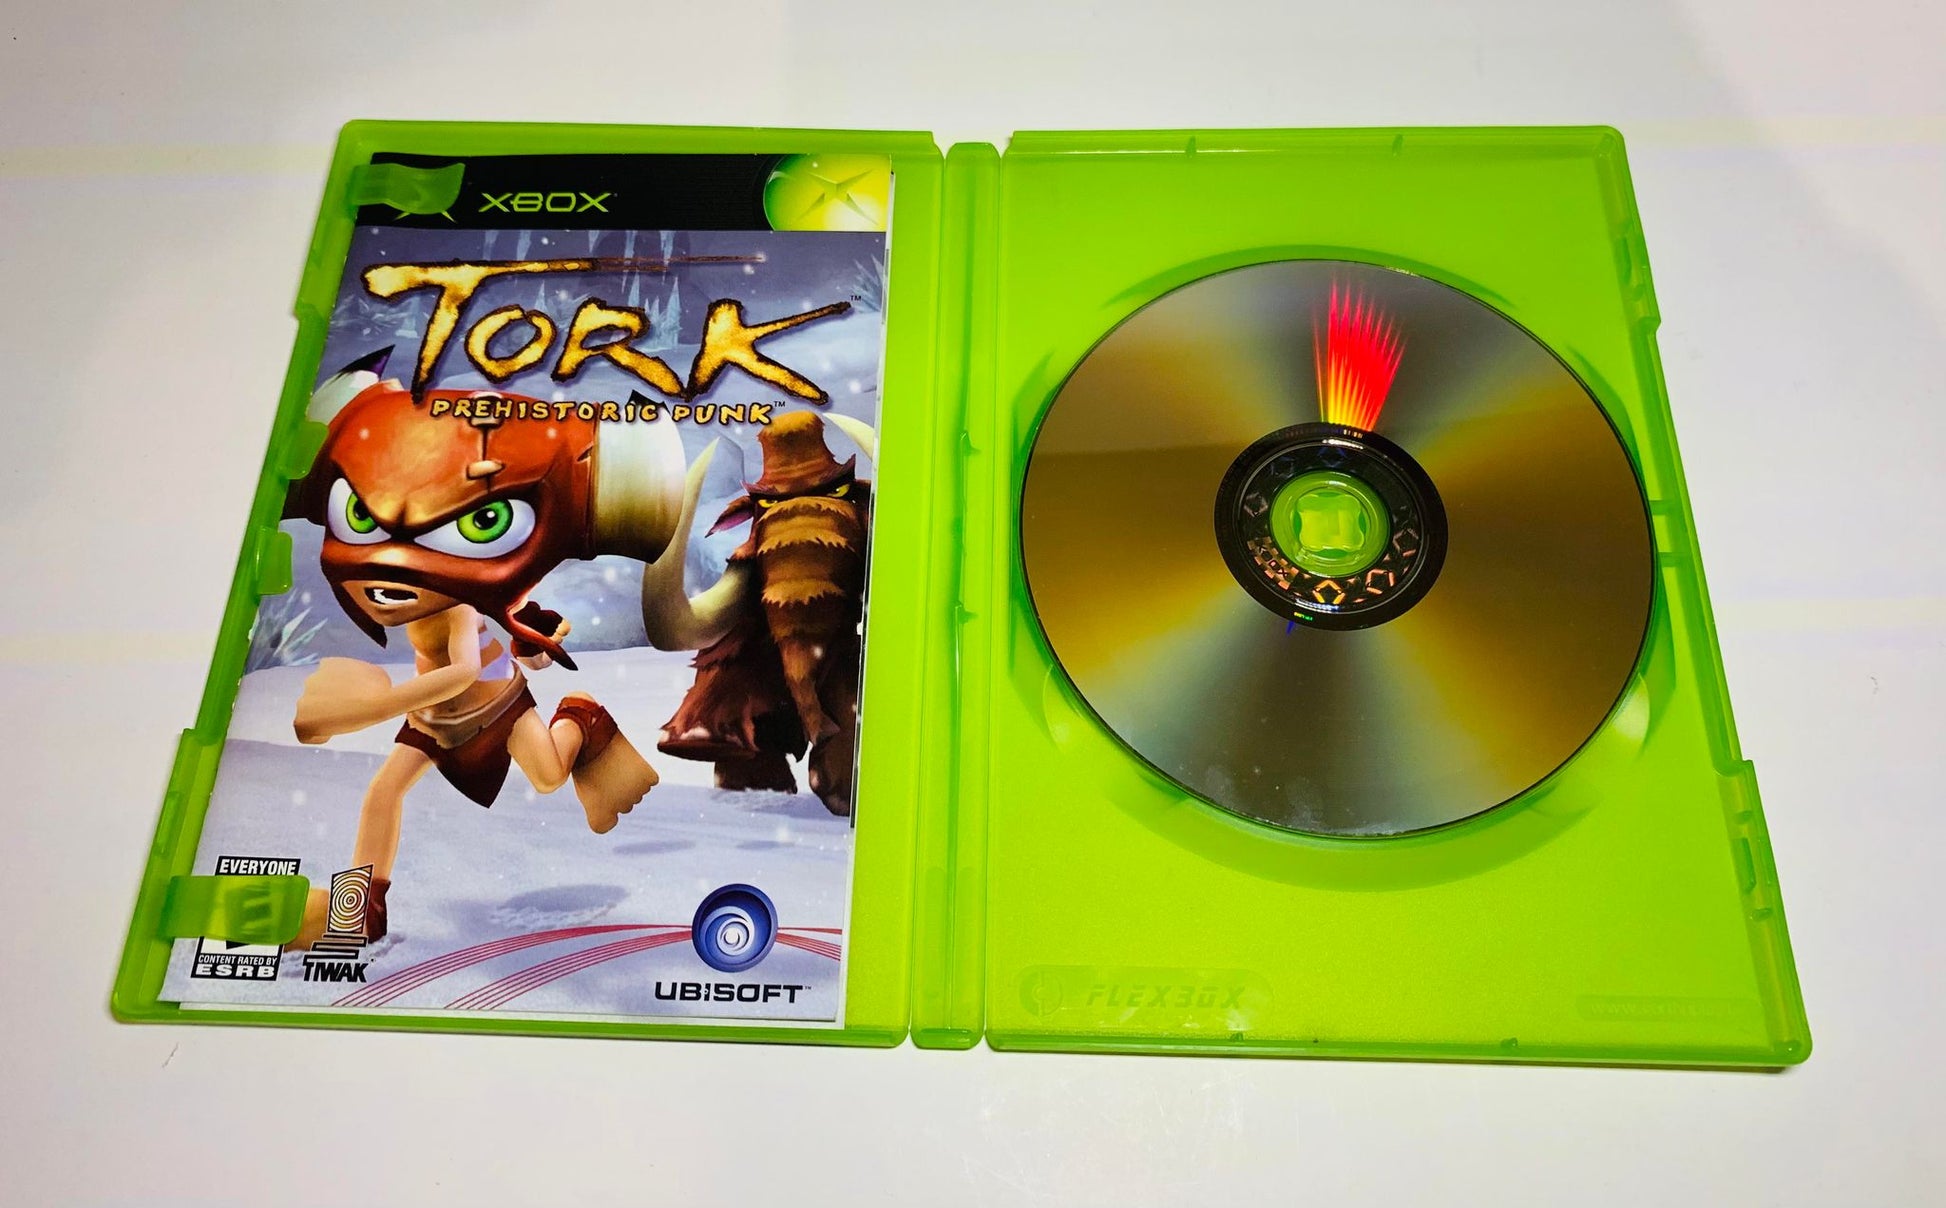 TORK PREHISTORIC PUNK (XBOX) - jeux video game-x